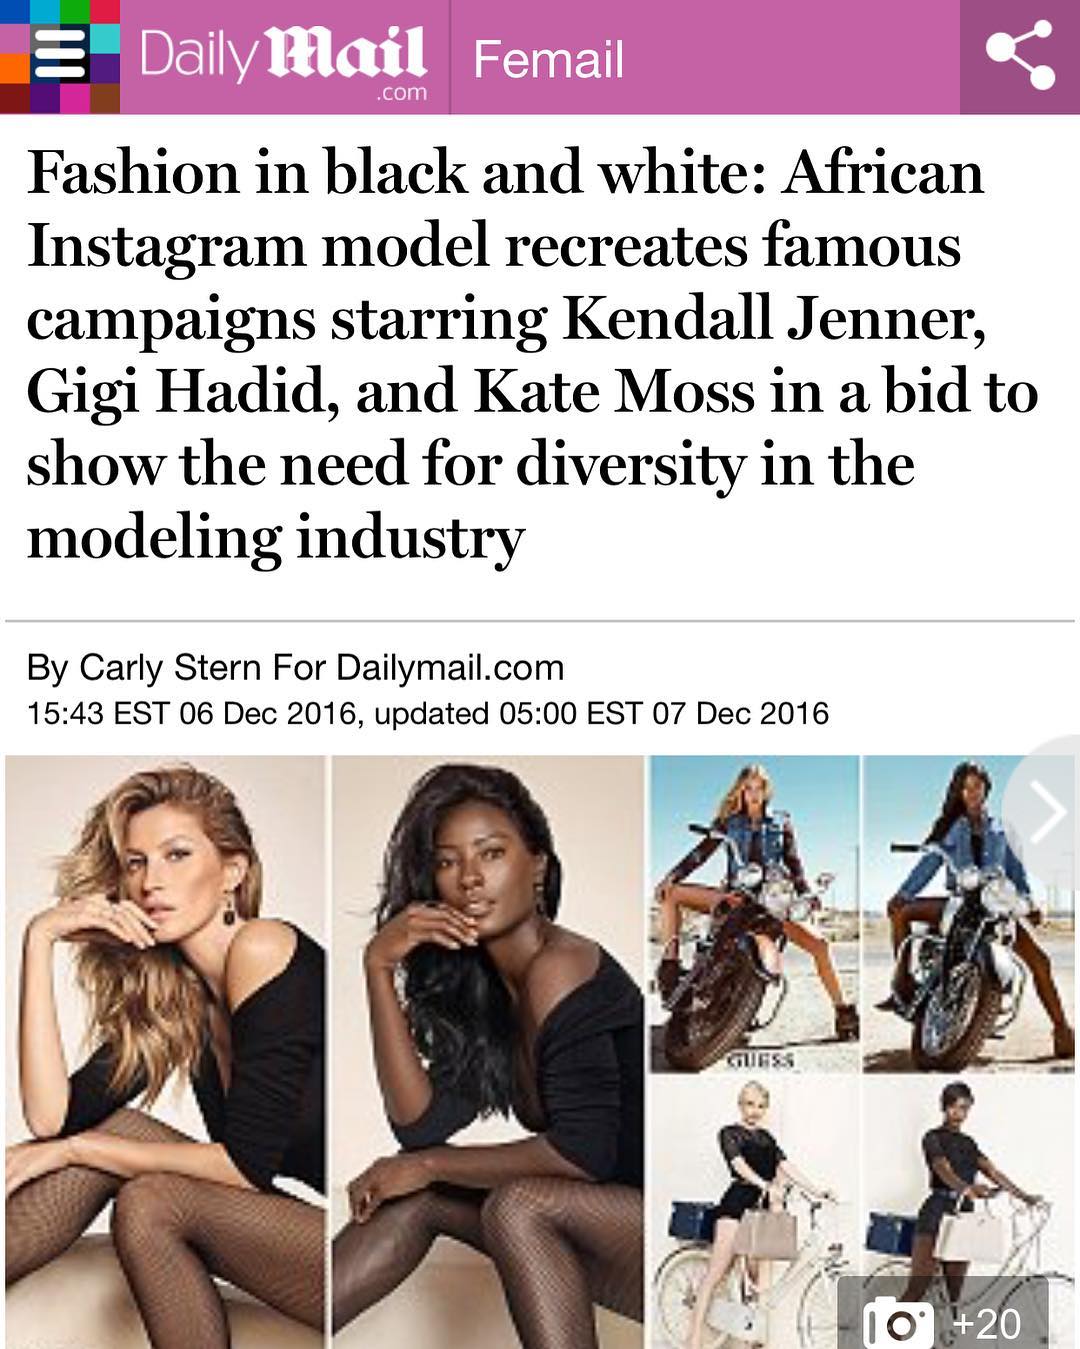 Stunning Liberian Model Recreates Famous Fashion Ads to Encourage